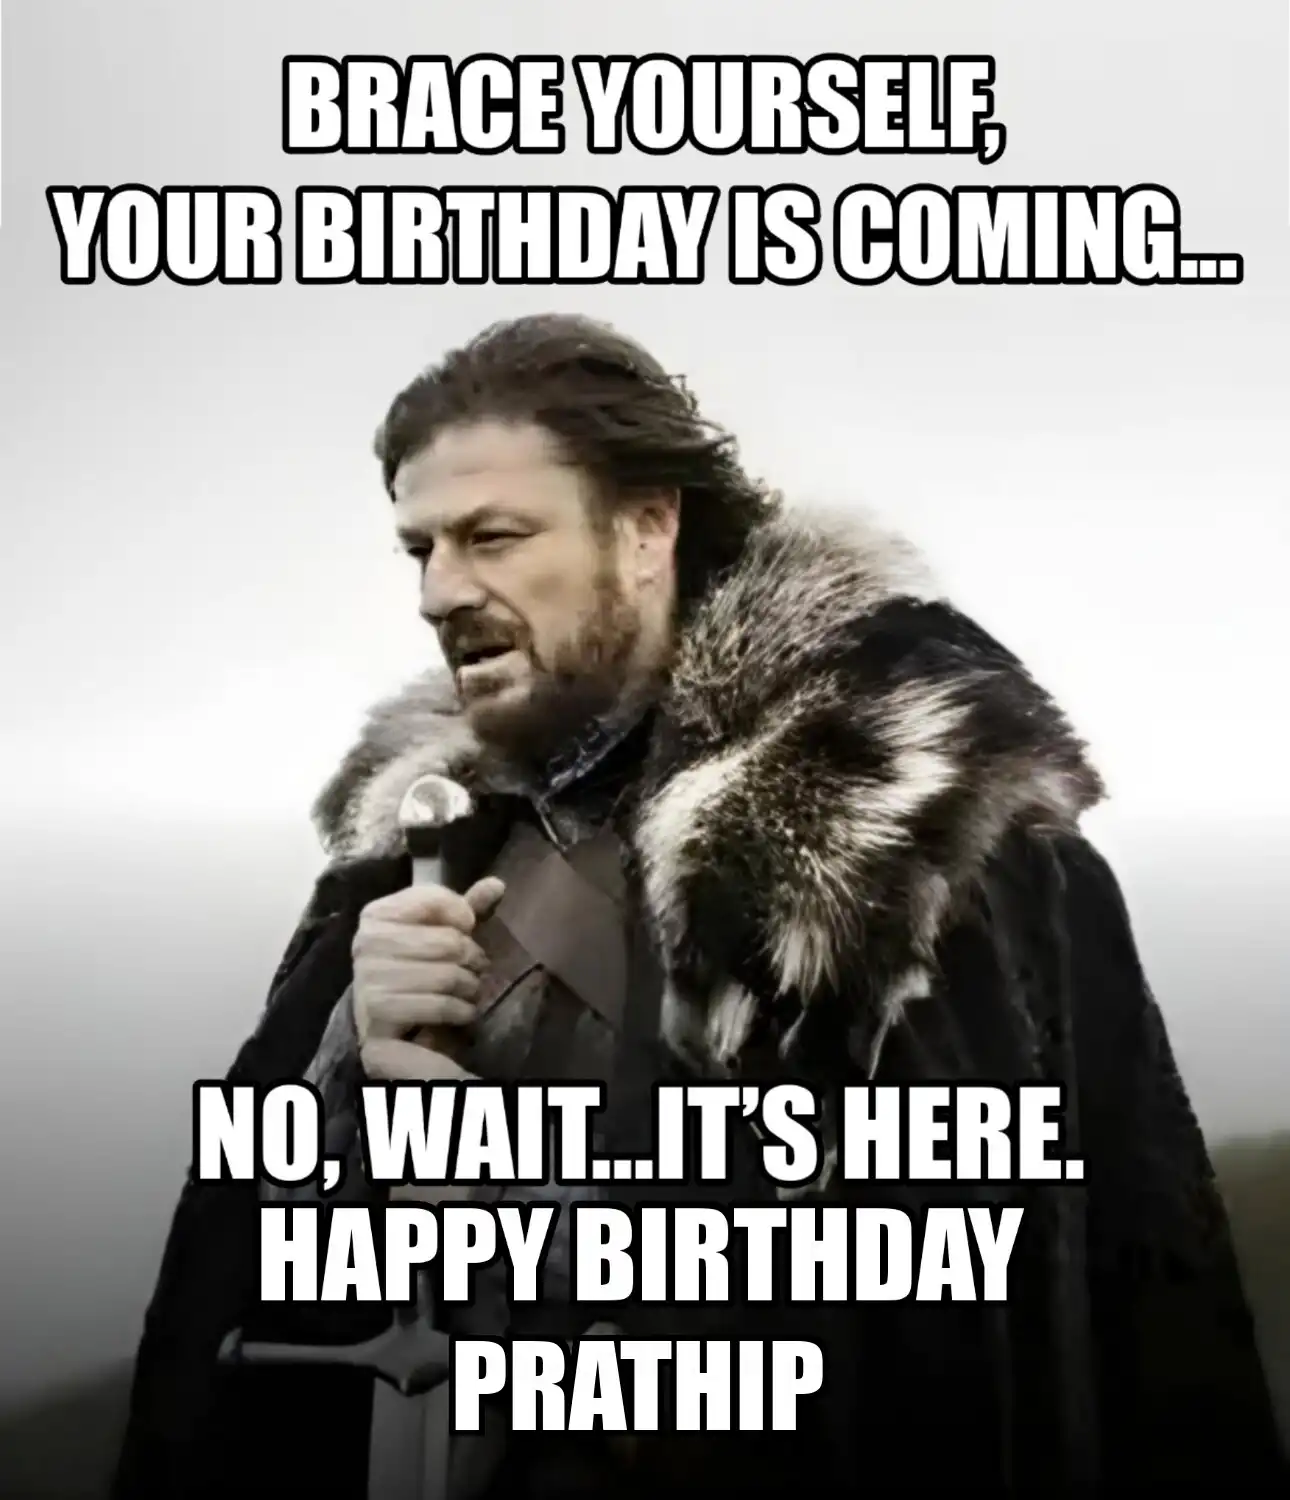 Happy Birthday Prathip Brace Yourself Your Birthday Is Coming Meme